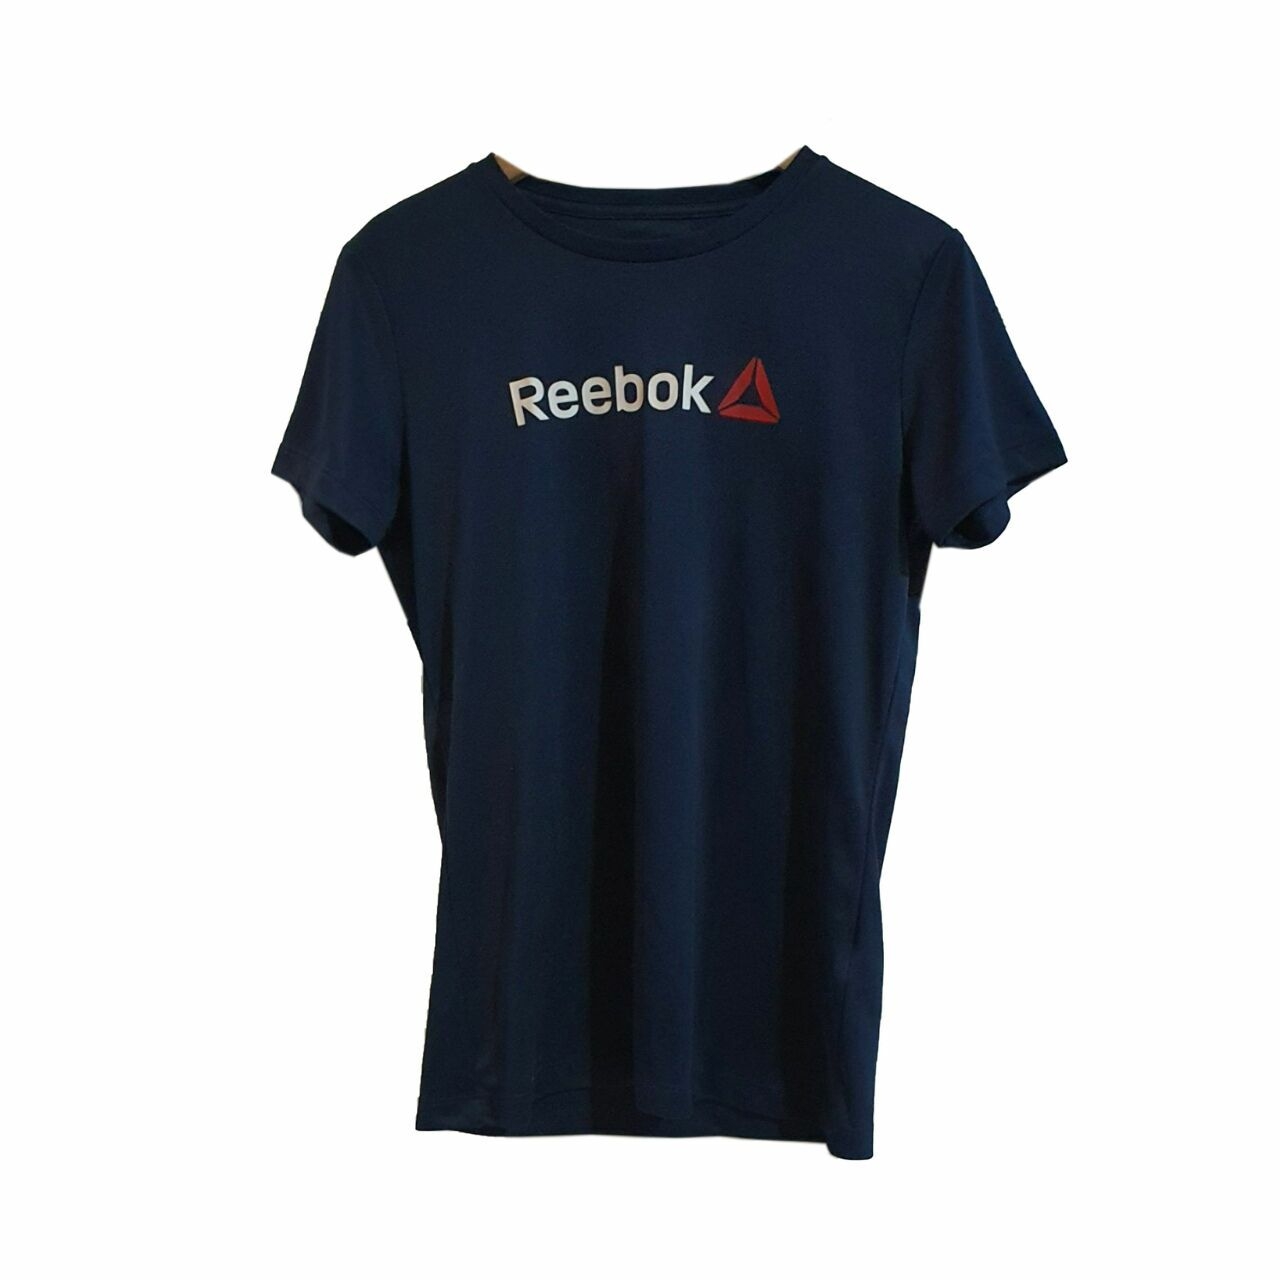 Reebok Blue Shirts